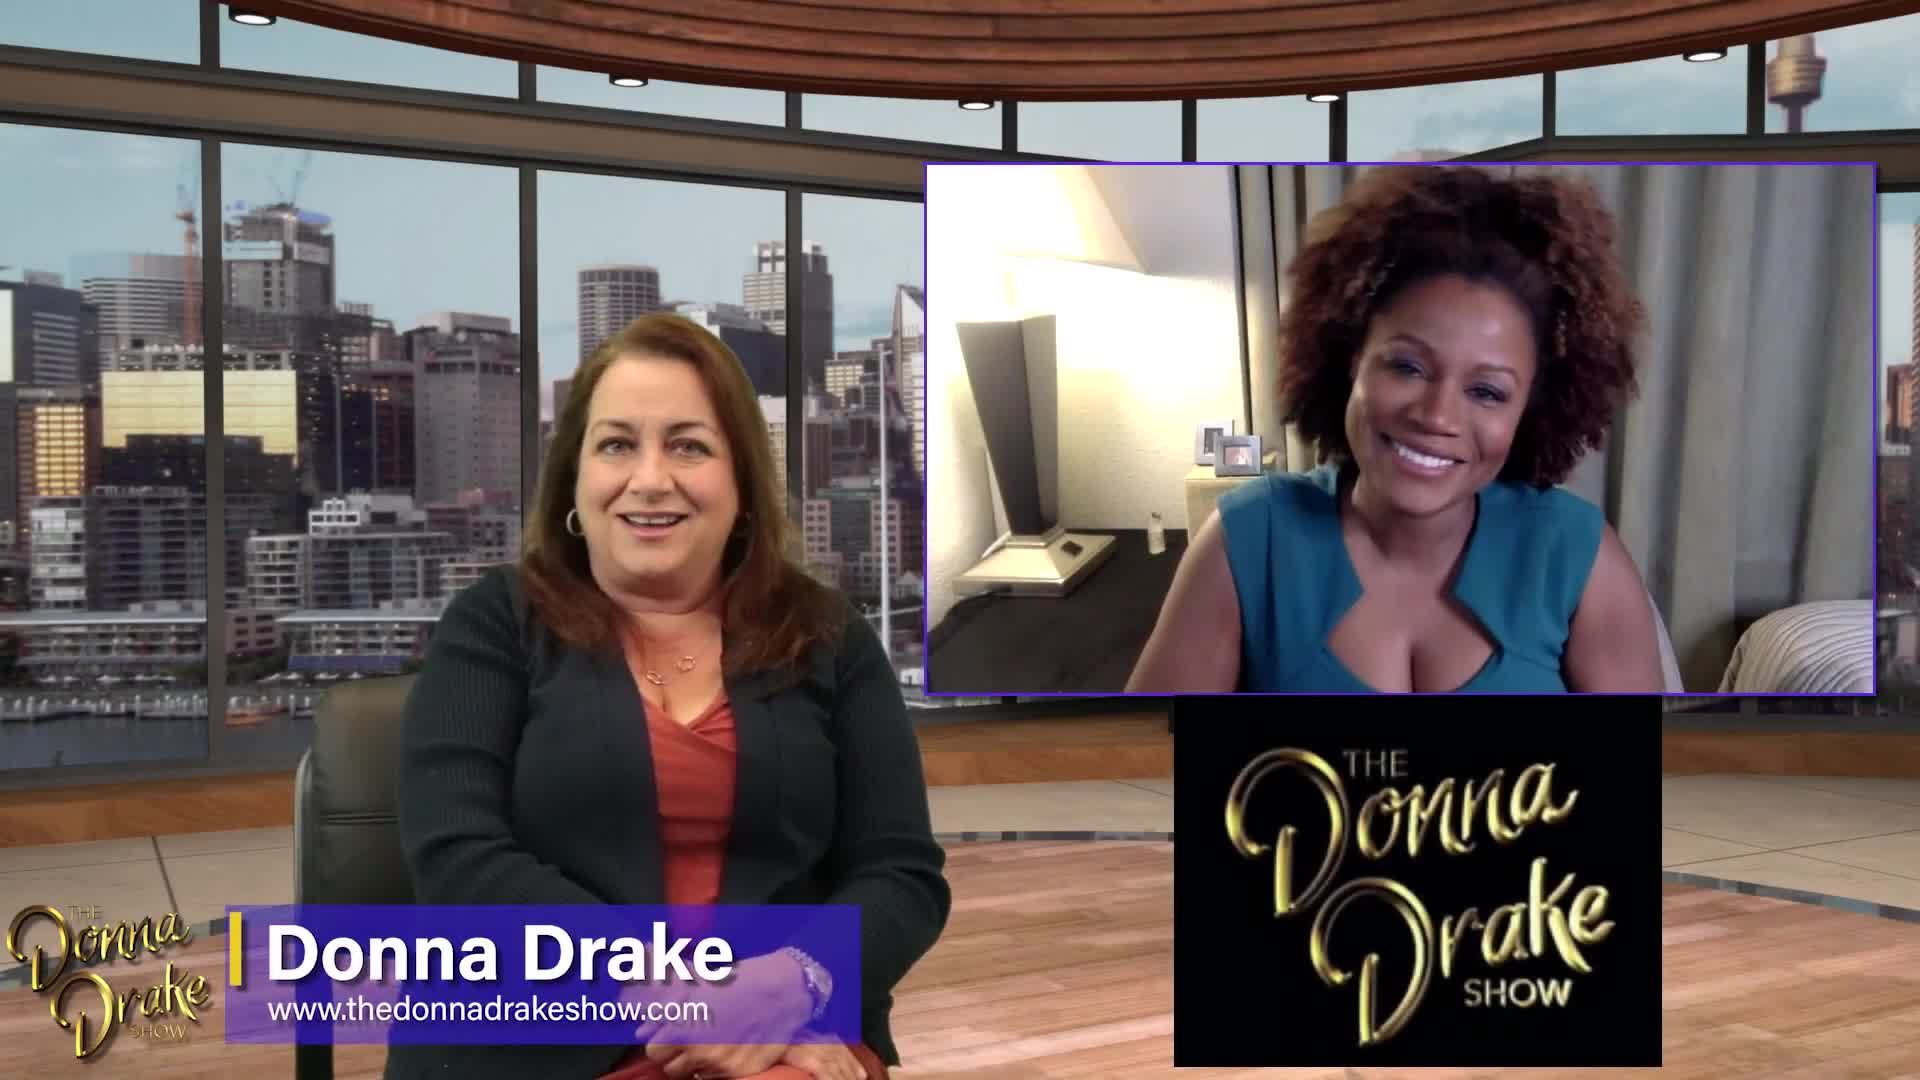 The Donna Drake Show Welcomes Gisela Adisa